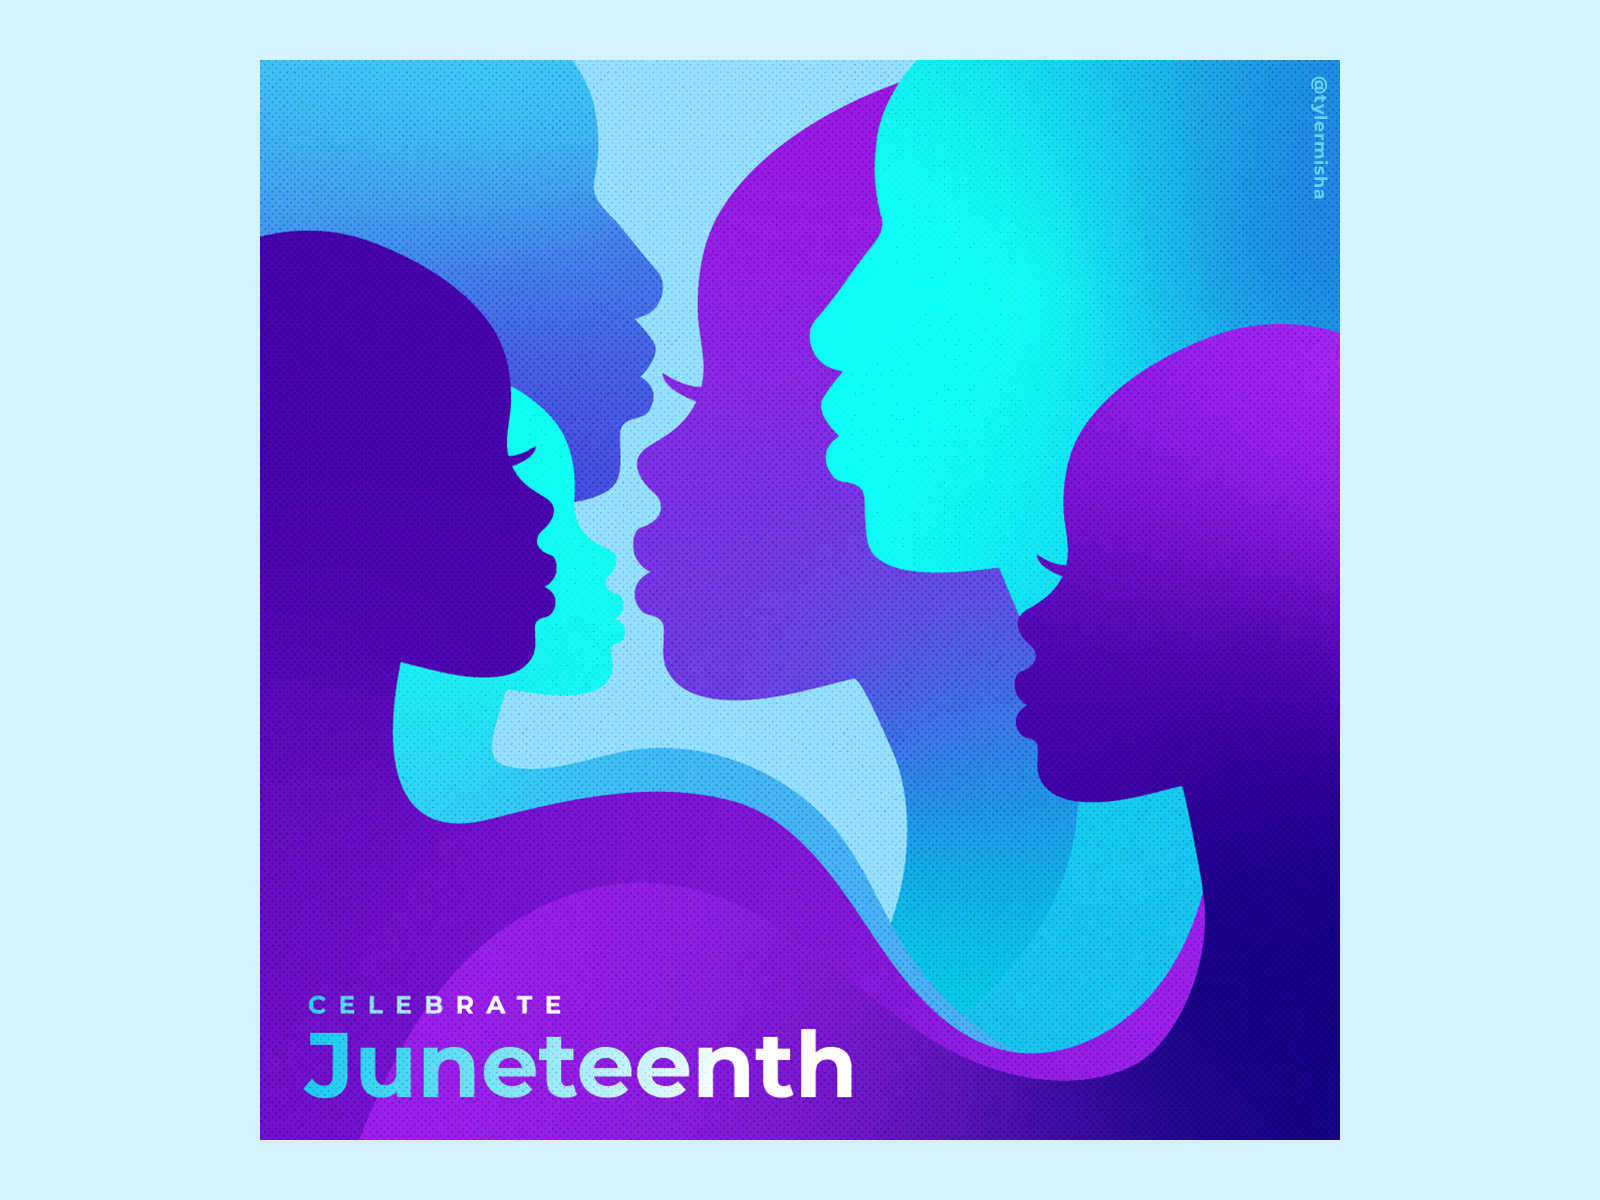 Celebrate Juneteenth designed by Tyler Mishá Barnett. 